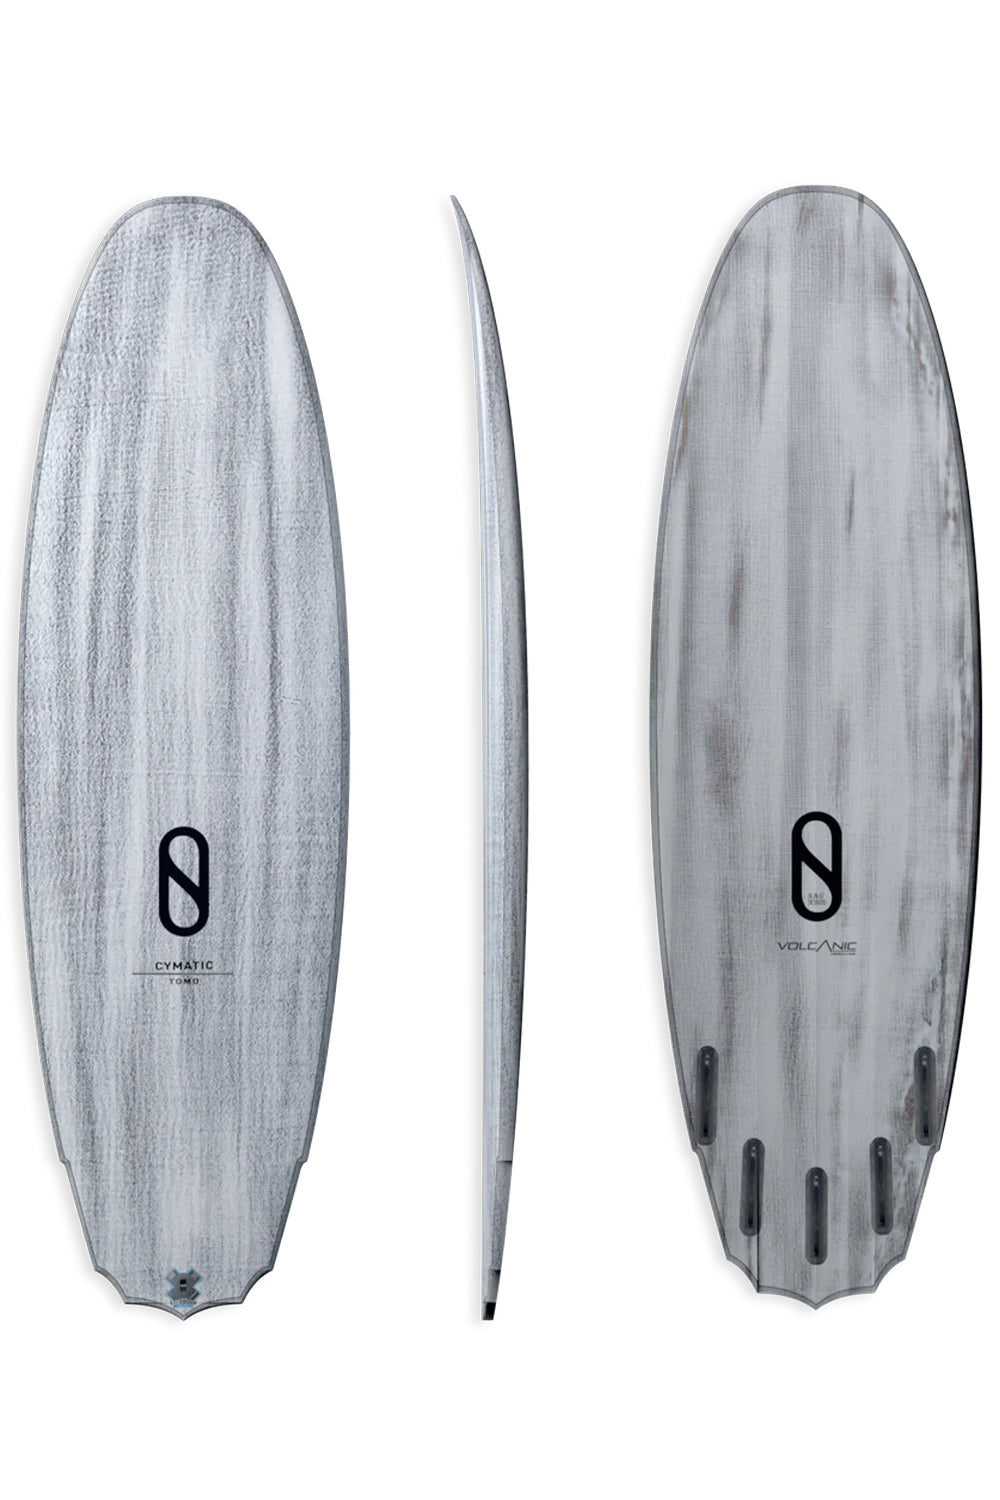 Slater Designs Cymatic Volcanic Surfboard